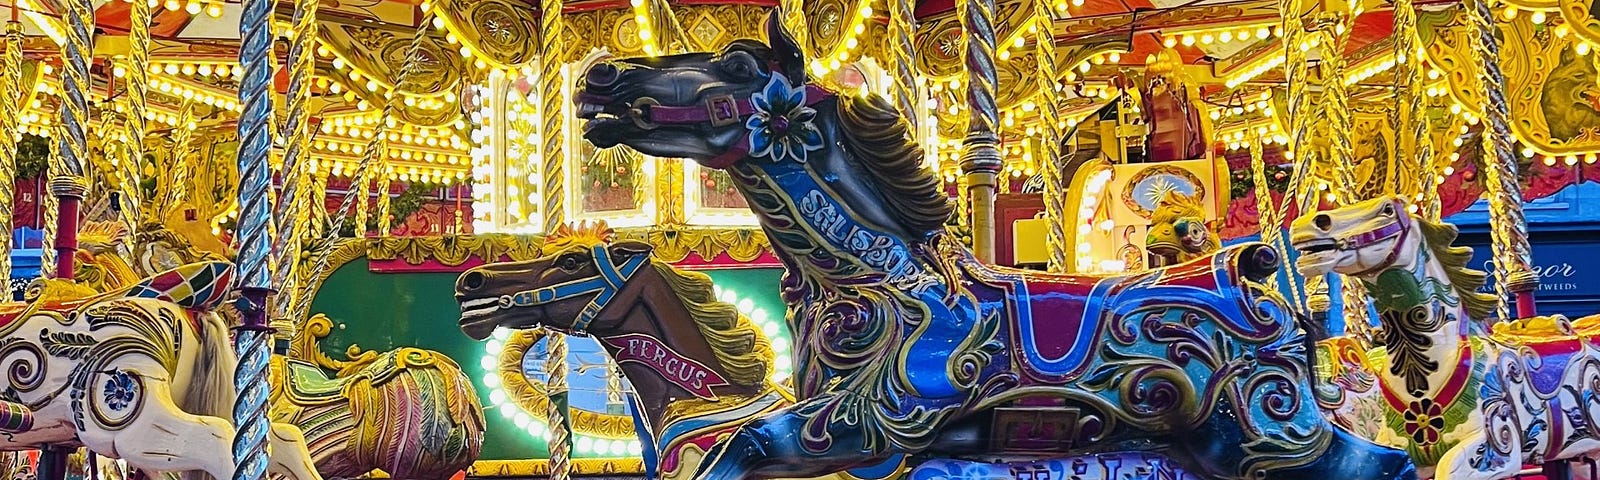 Carousel horses. Photo by Belcairn